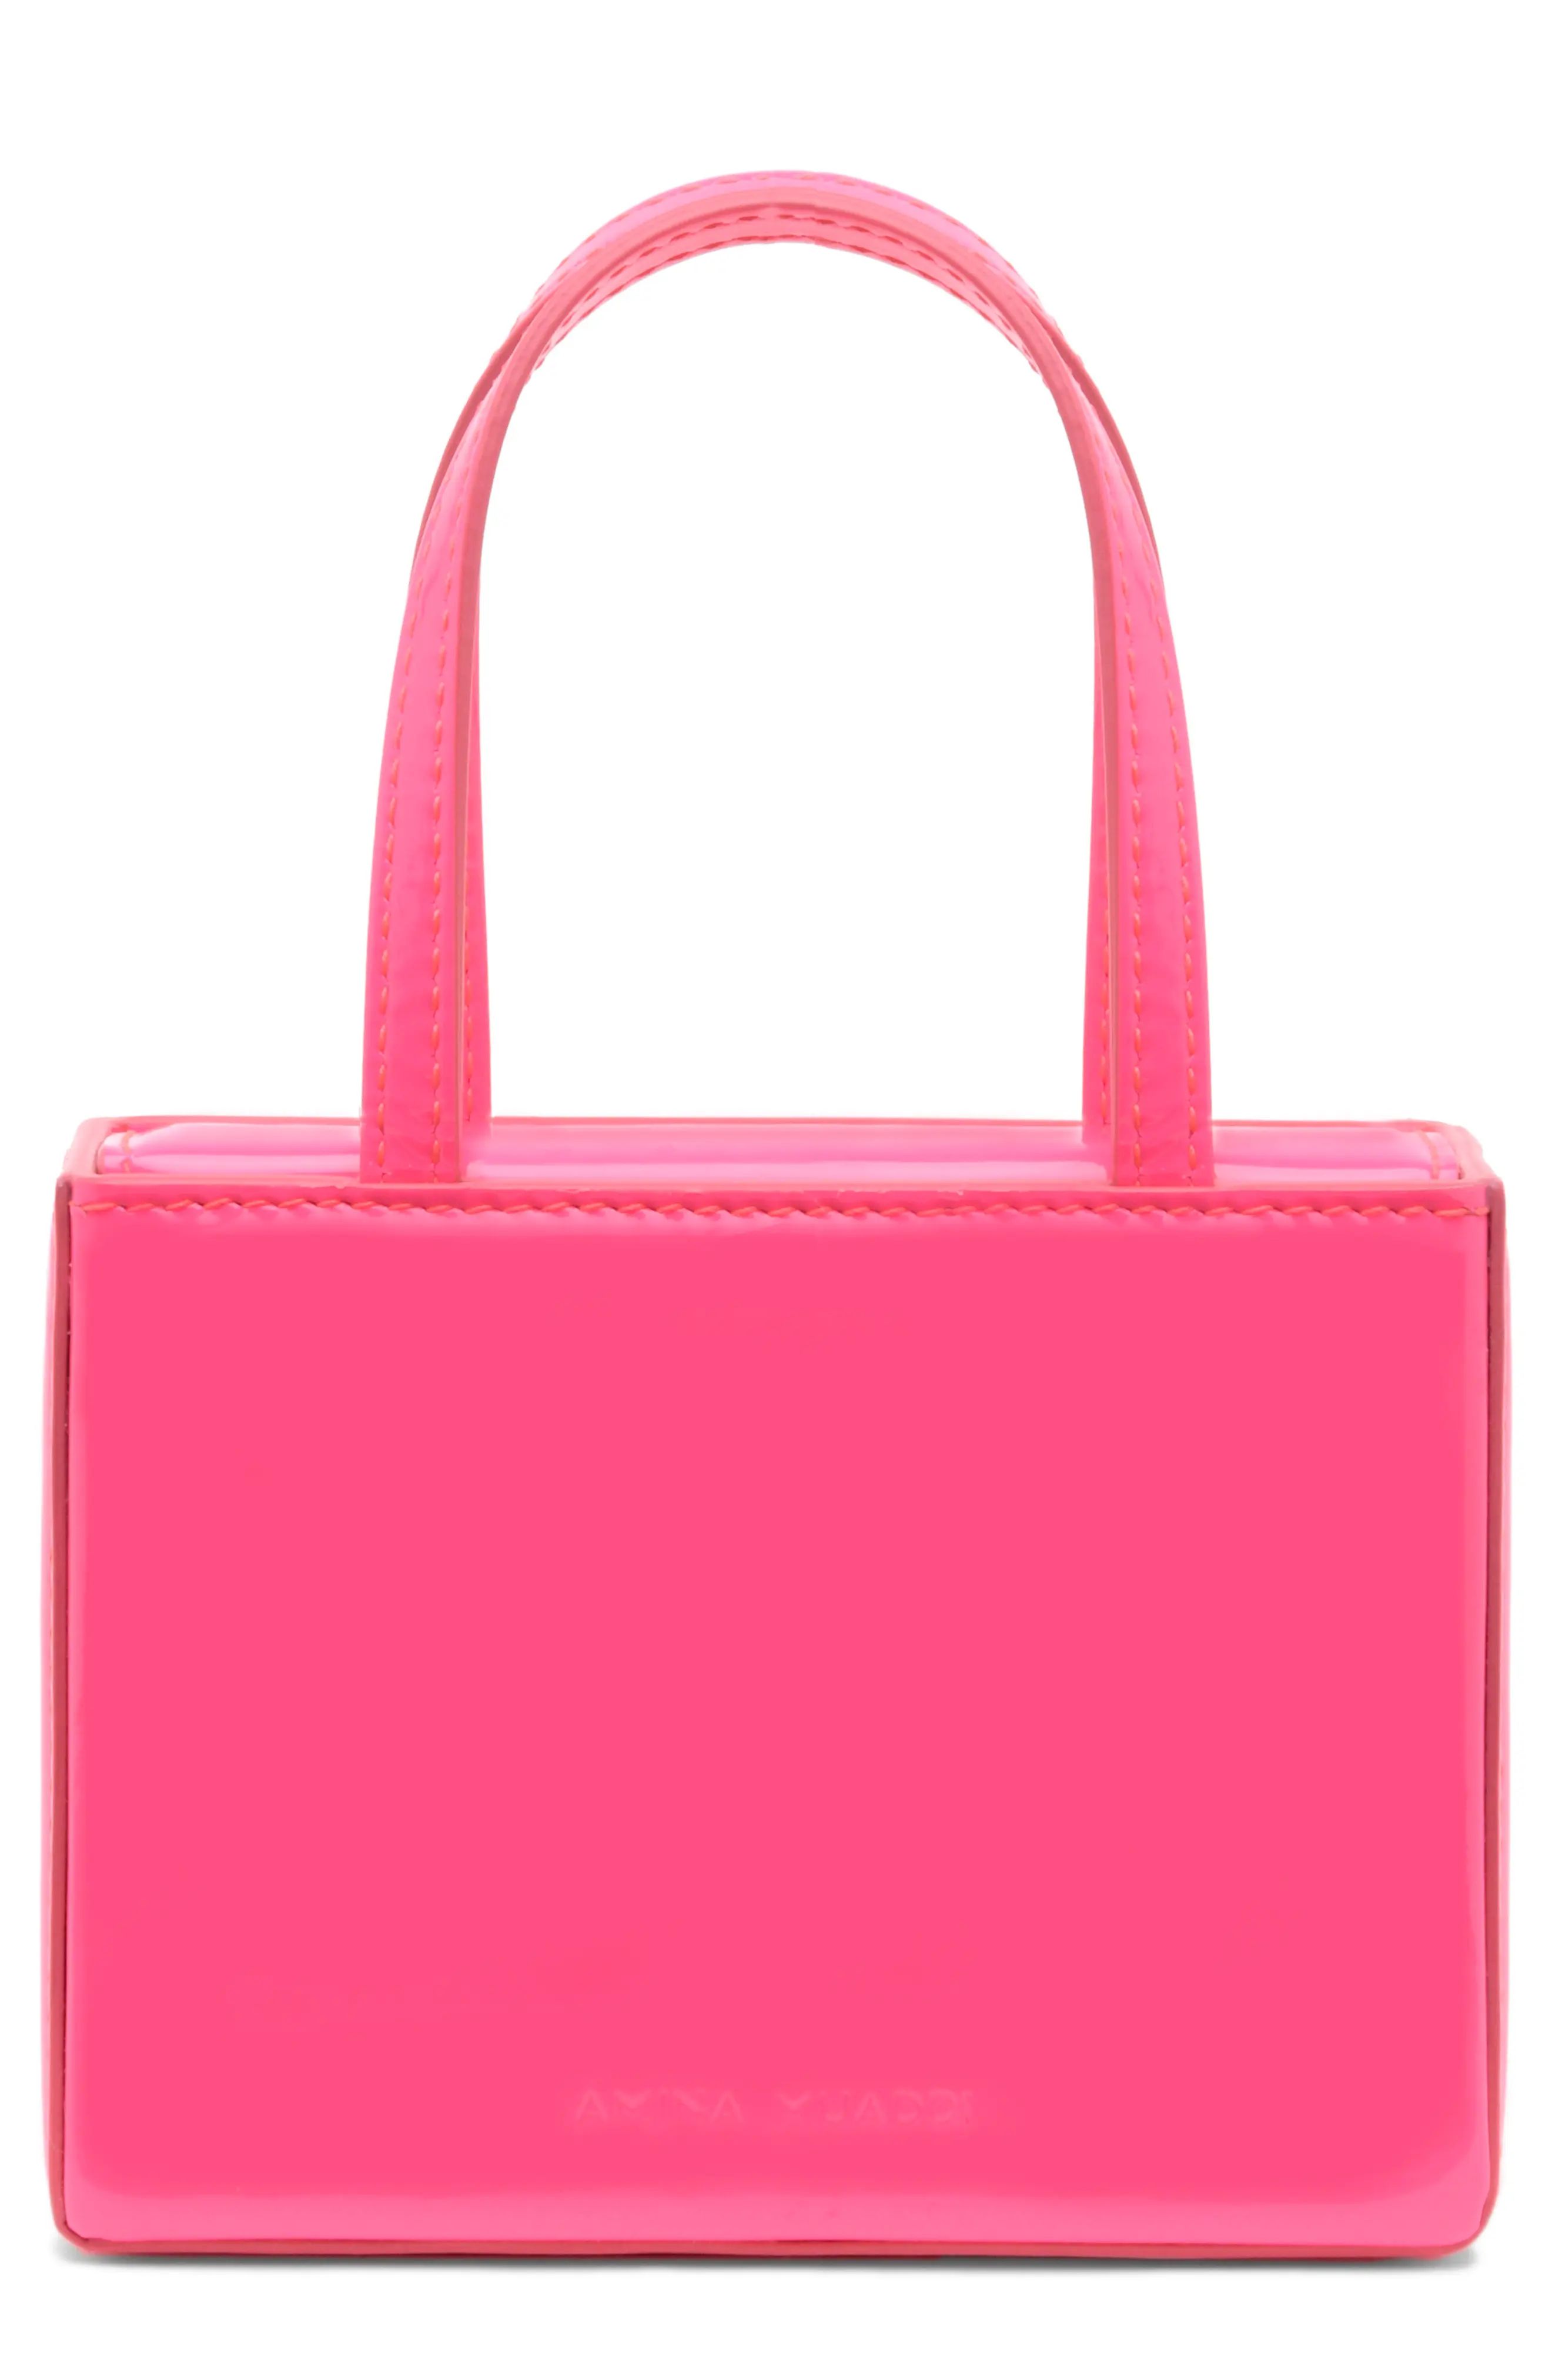 Amina Muaddi Superamini Georgia Leather Top Handle Bag in Pink Patent at Nordstrom | Nordstrom